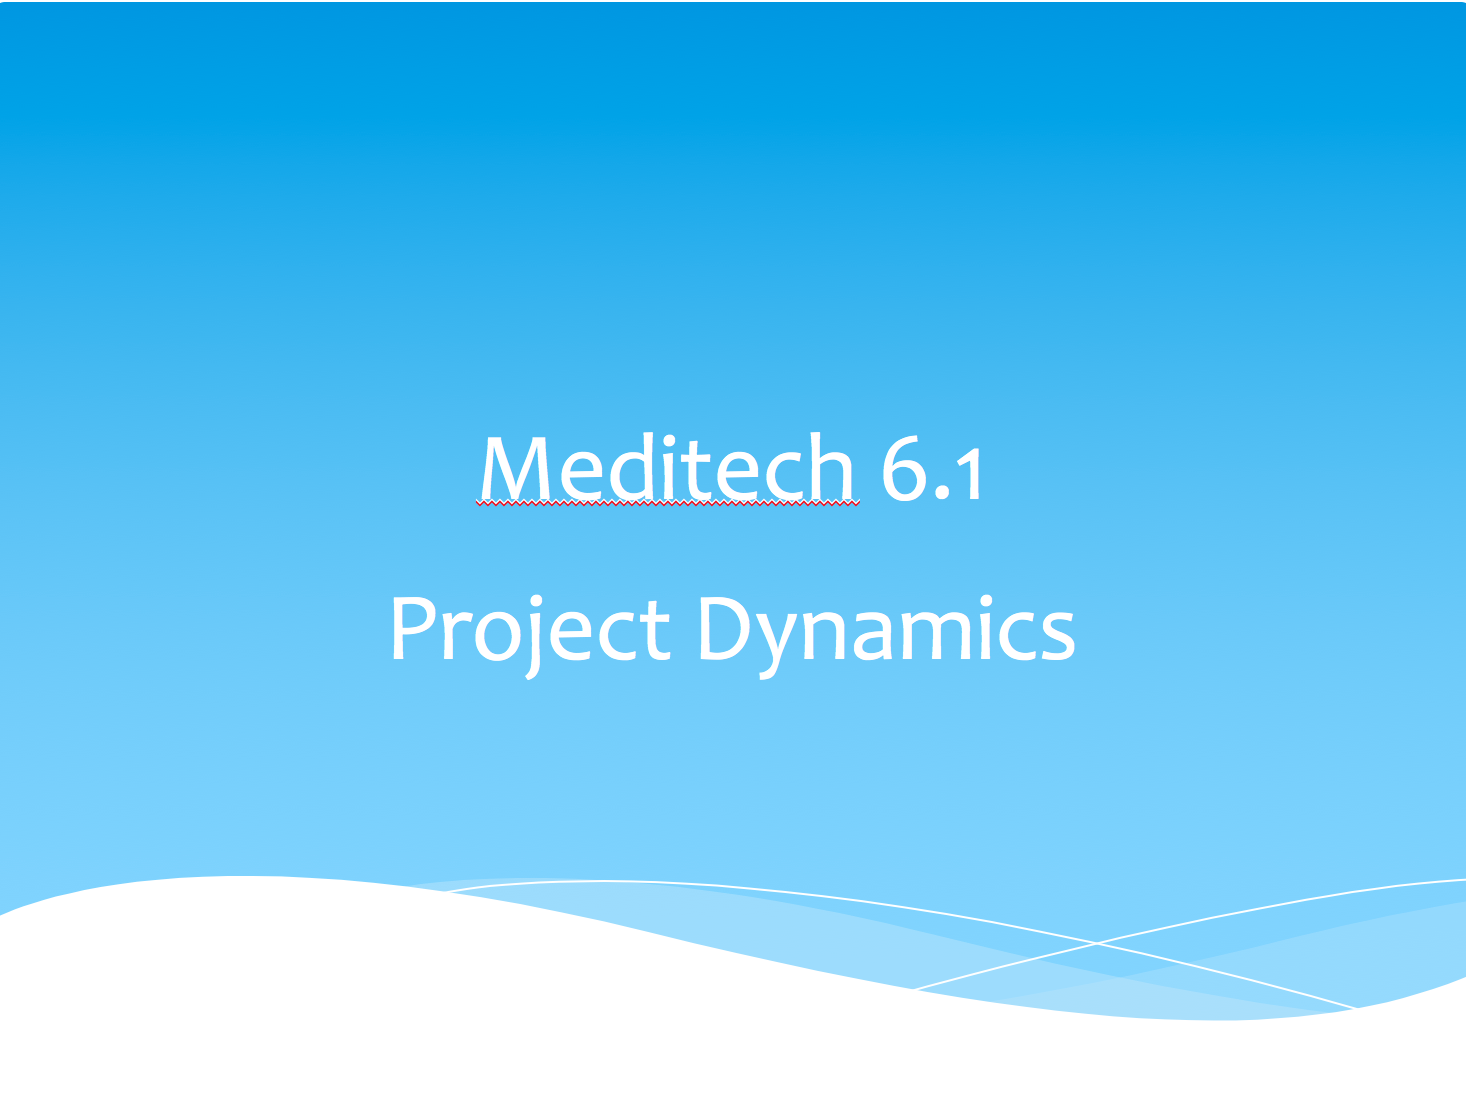 6.1 Project Dynamics